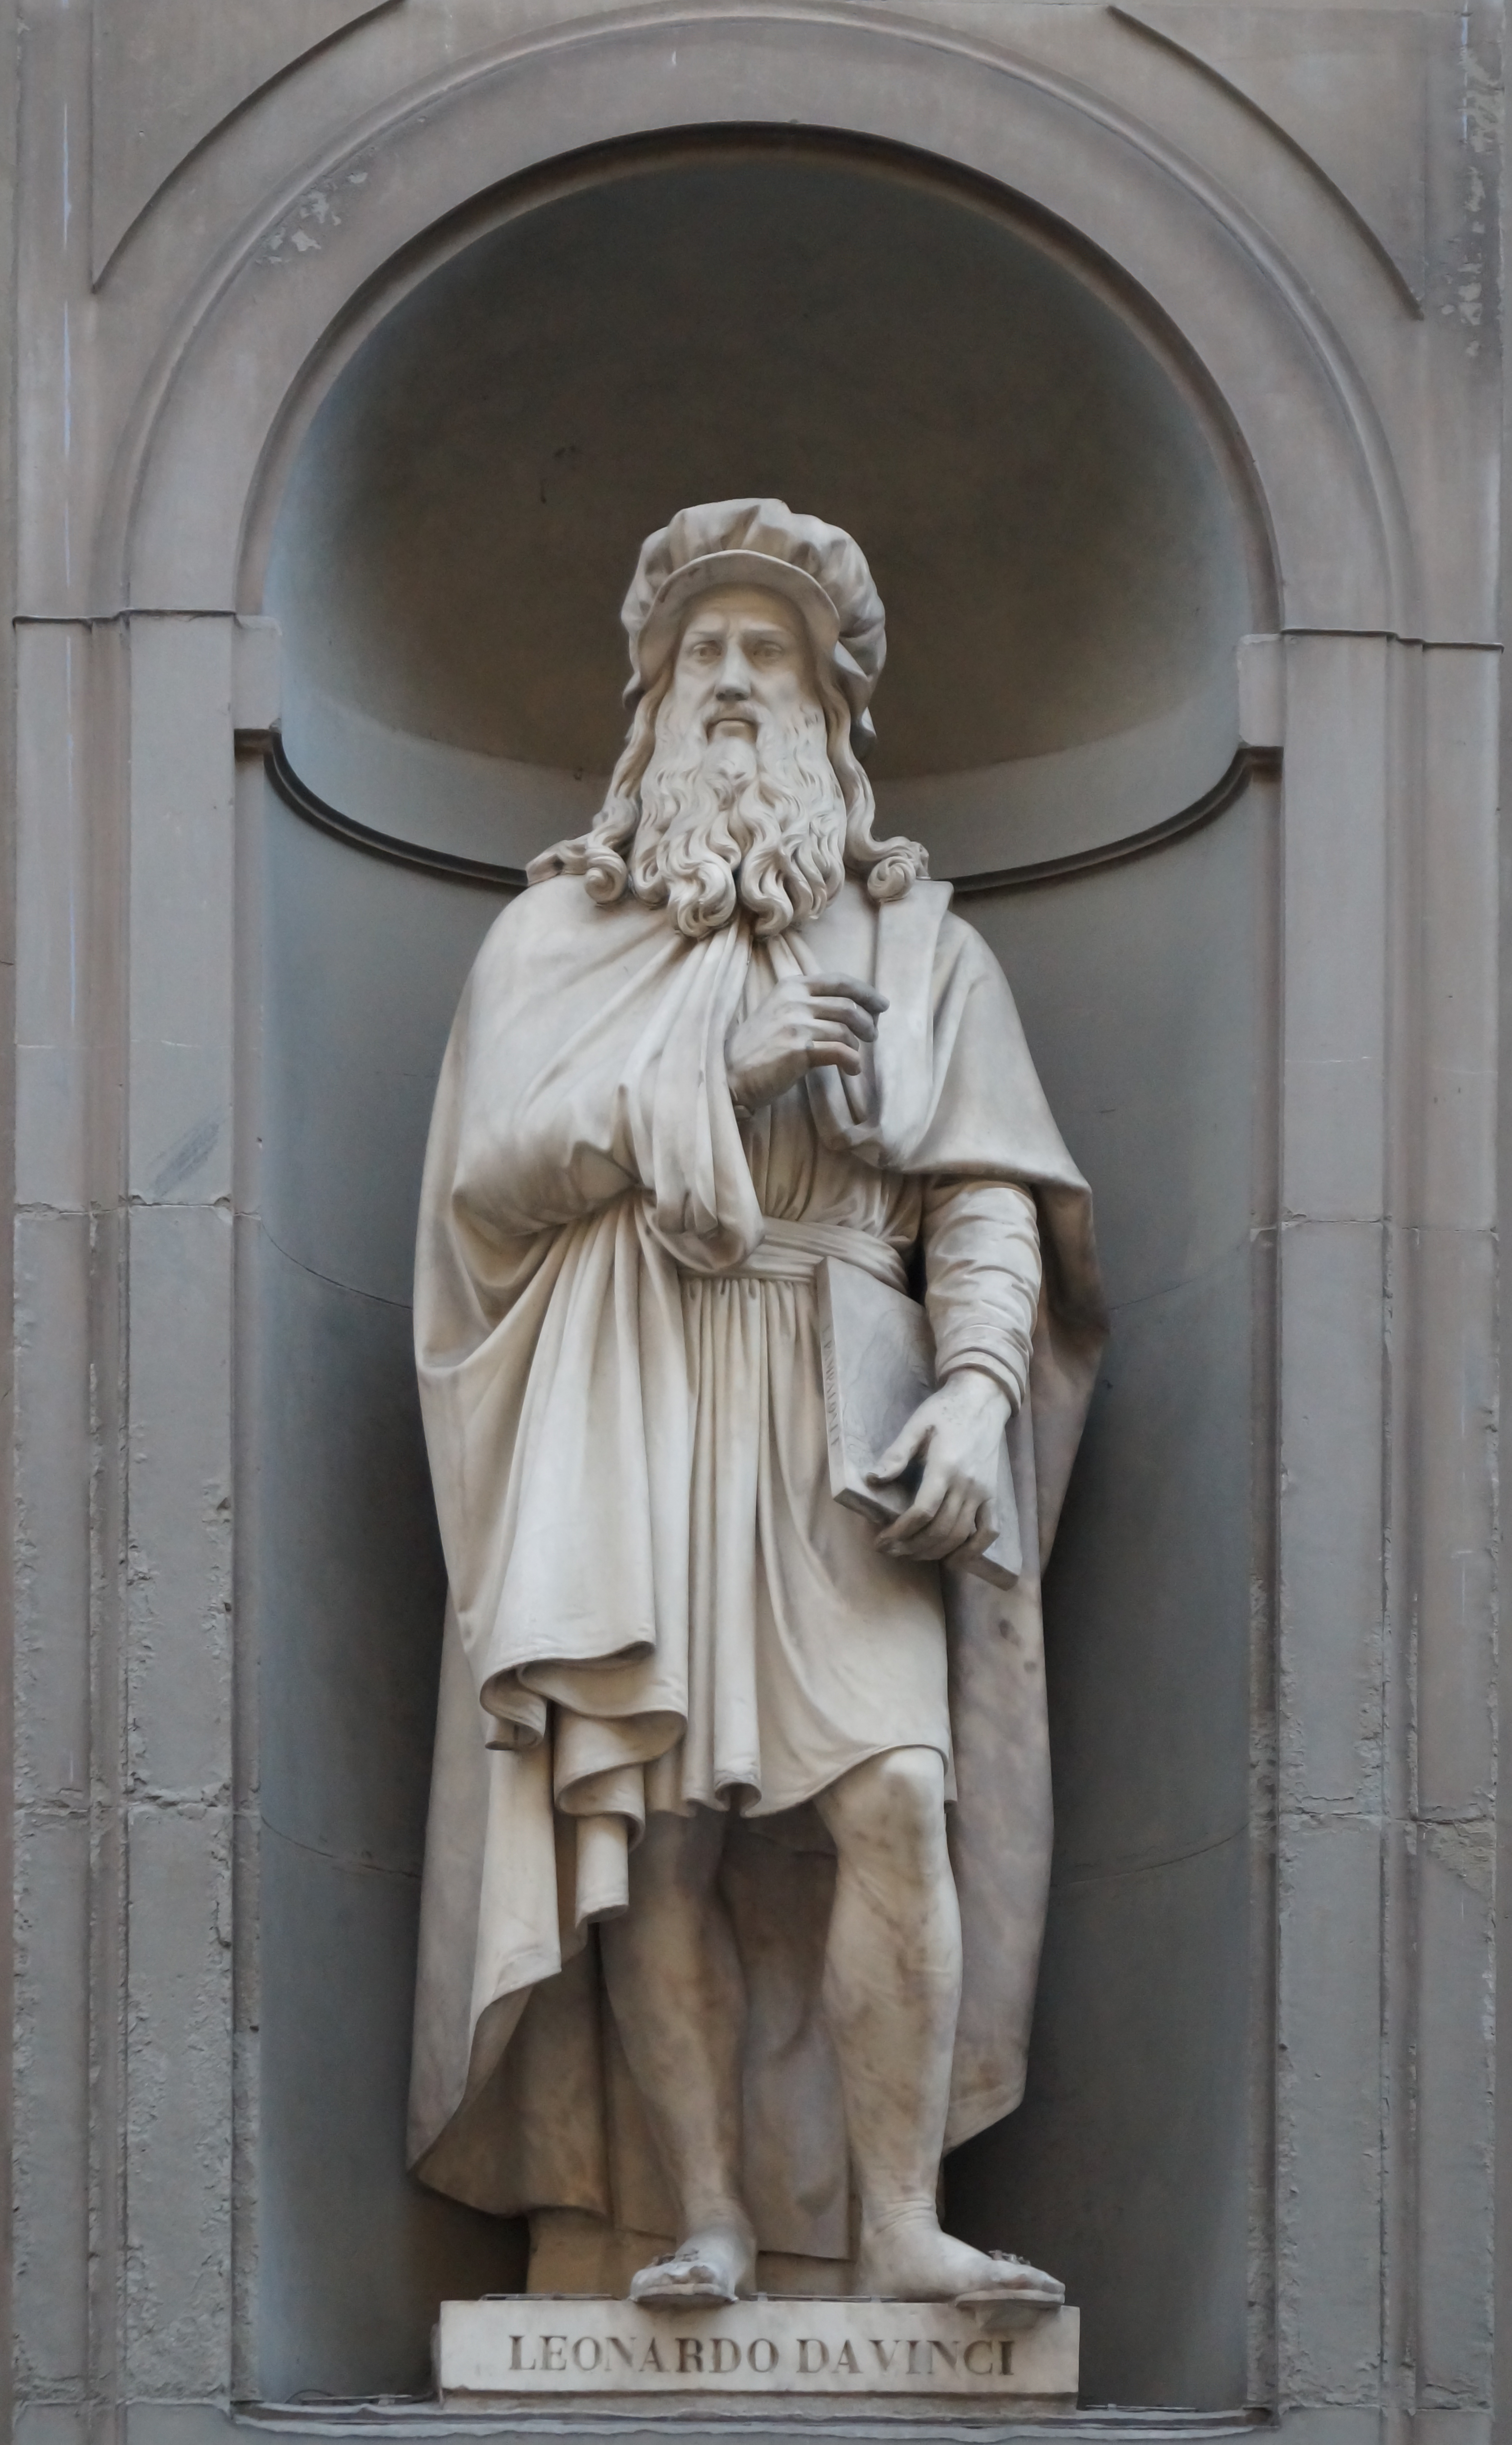 File:Statue of Leonardo da Vinci in Florence.jpg - Wikimedia Commons